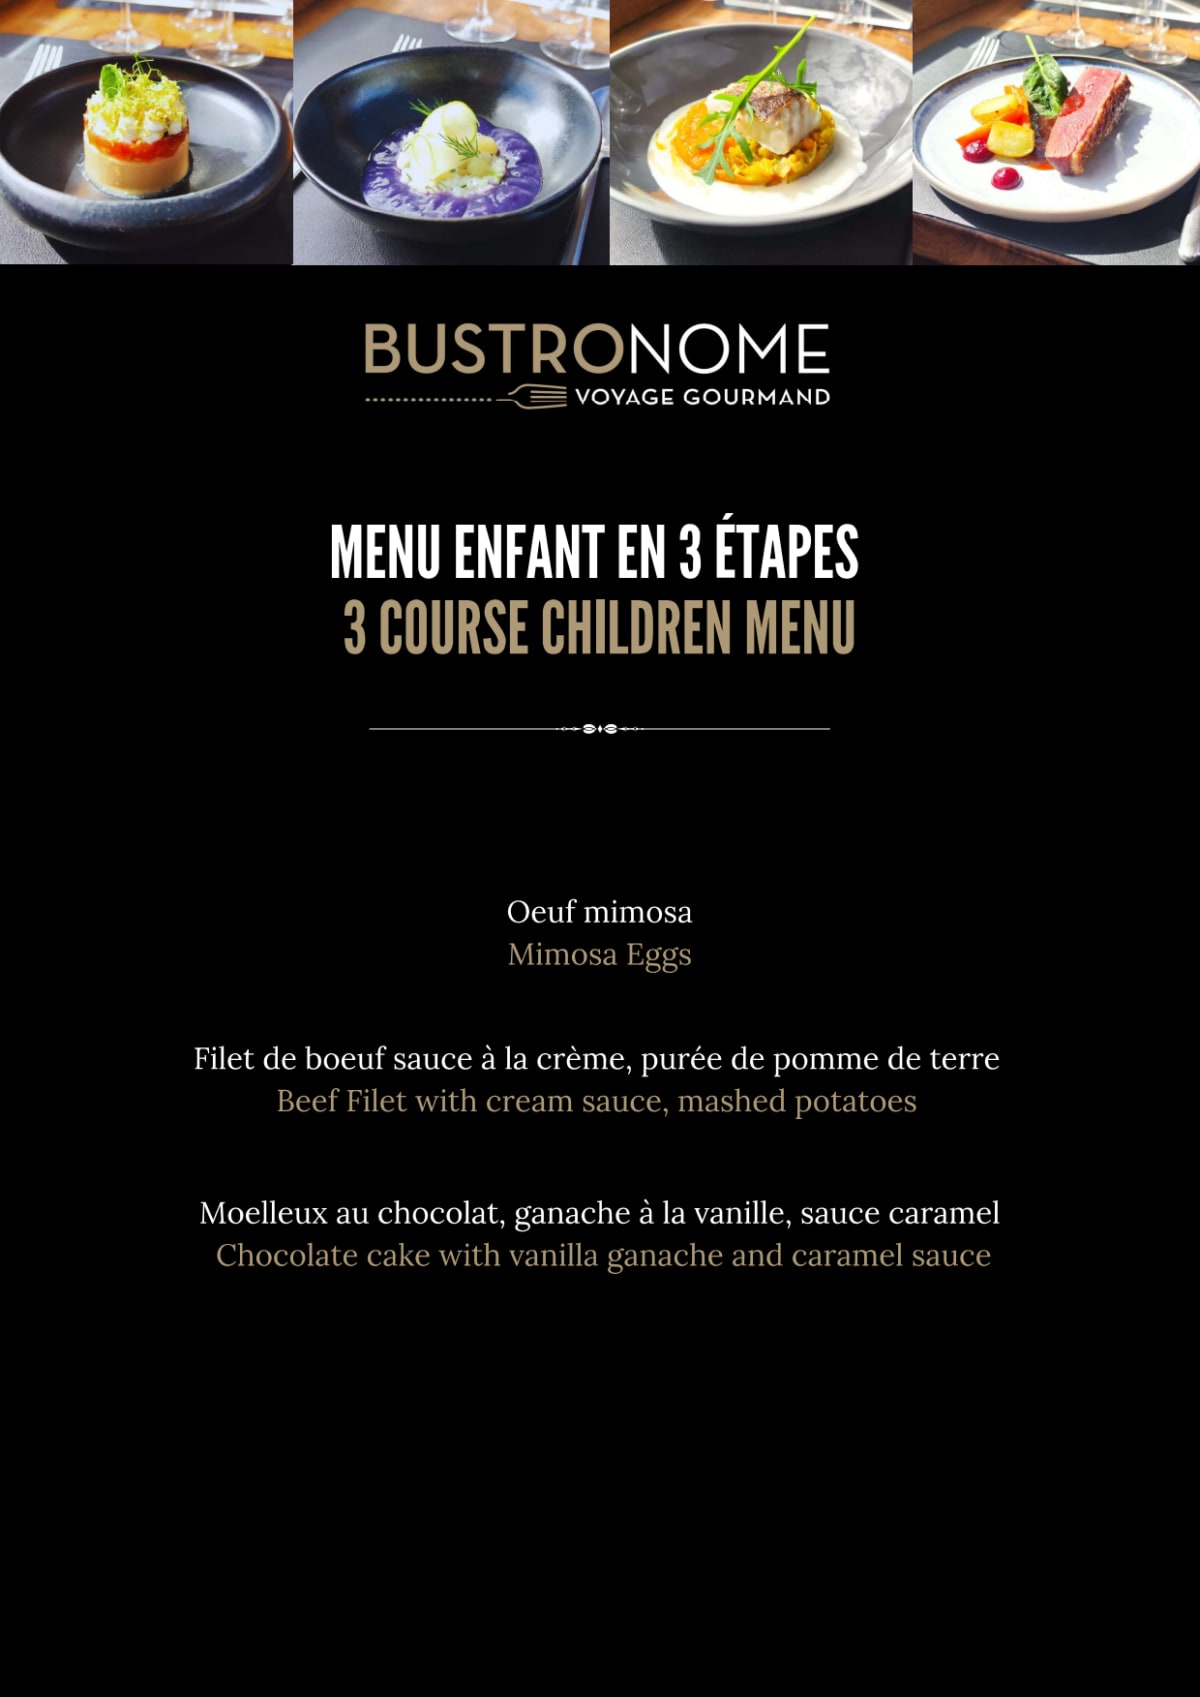 Bustronome menu